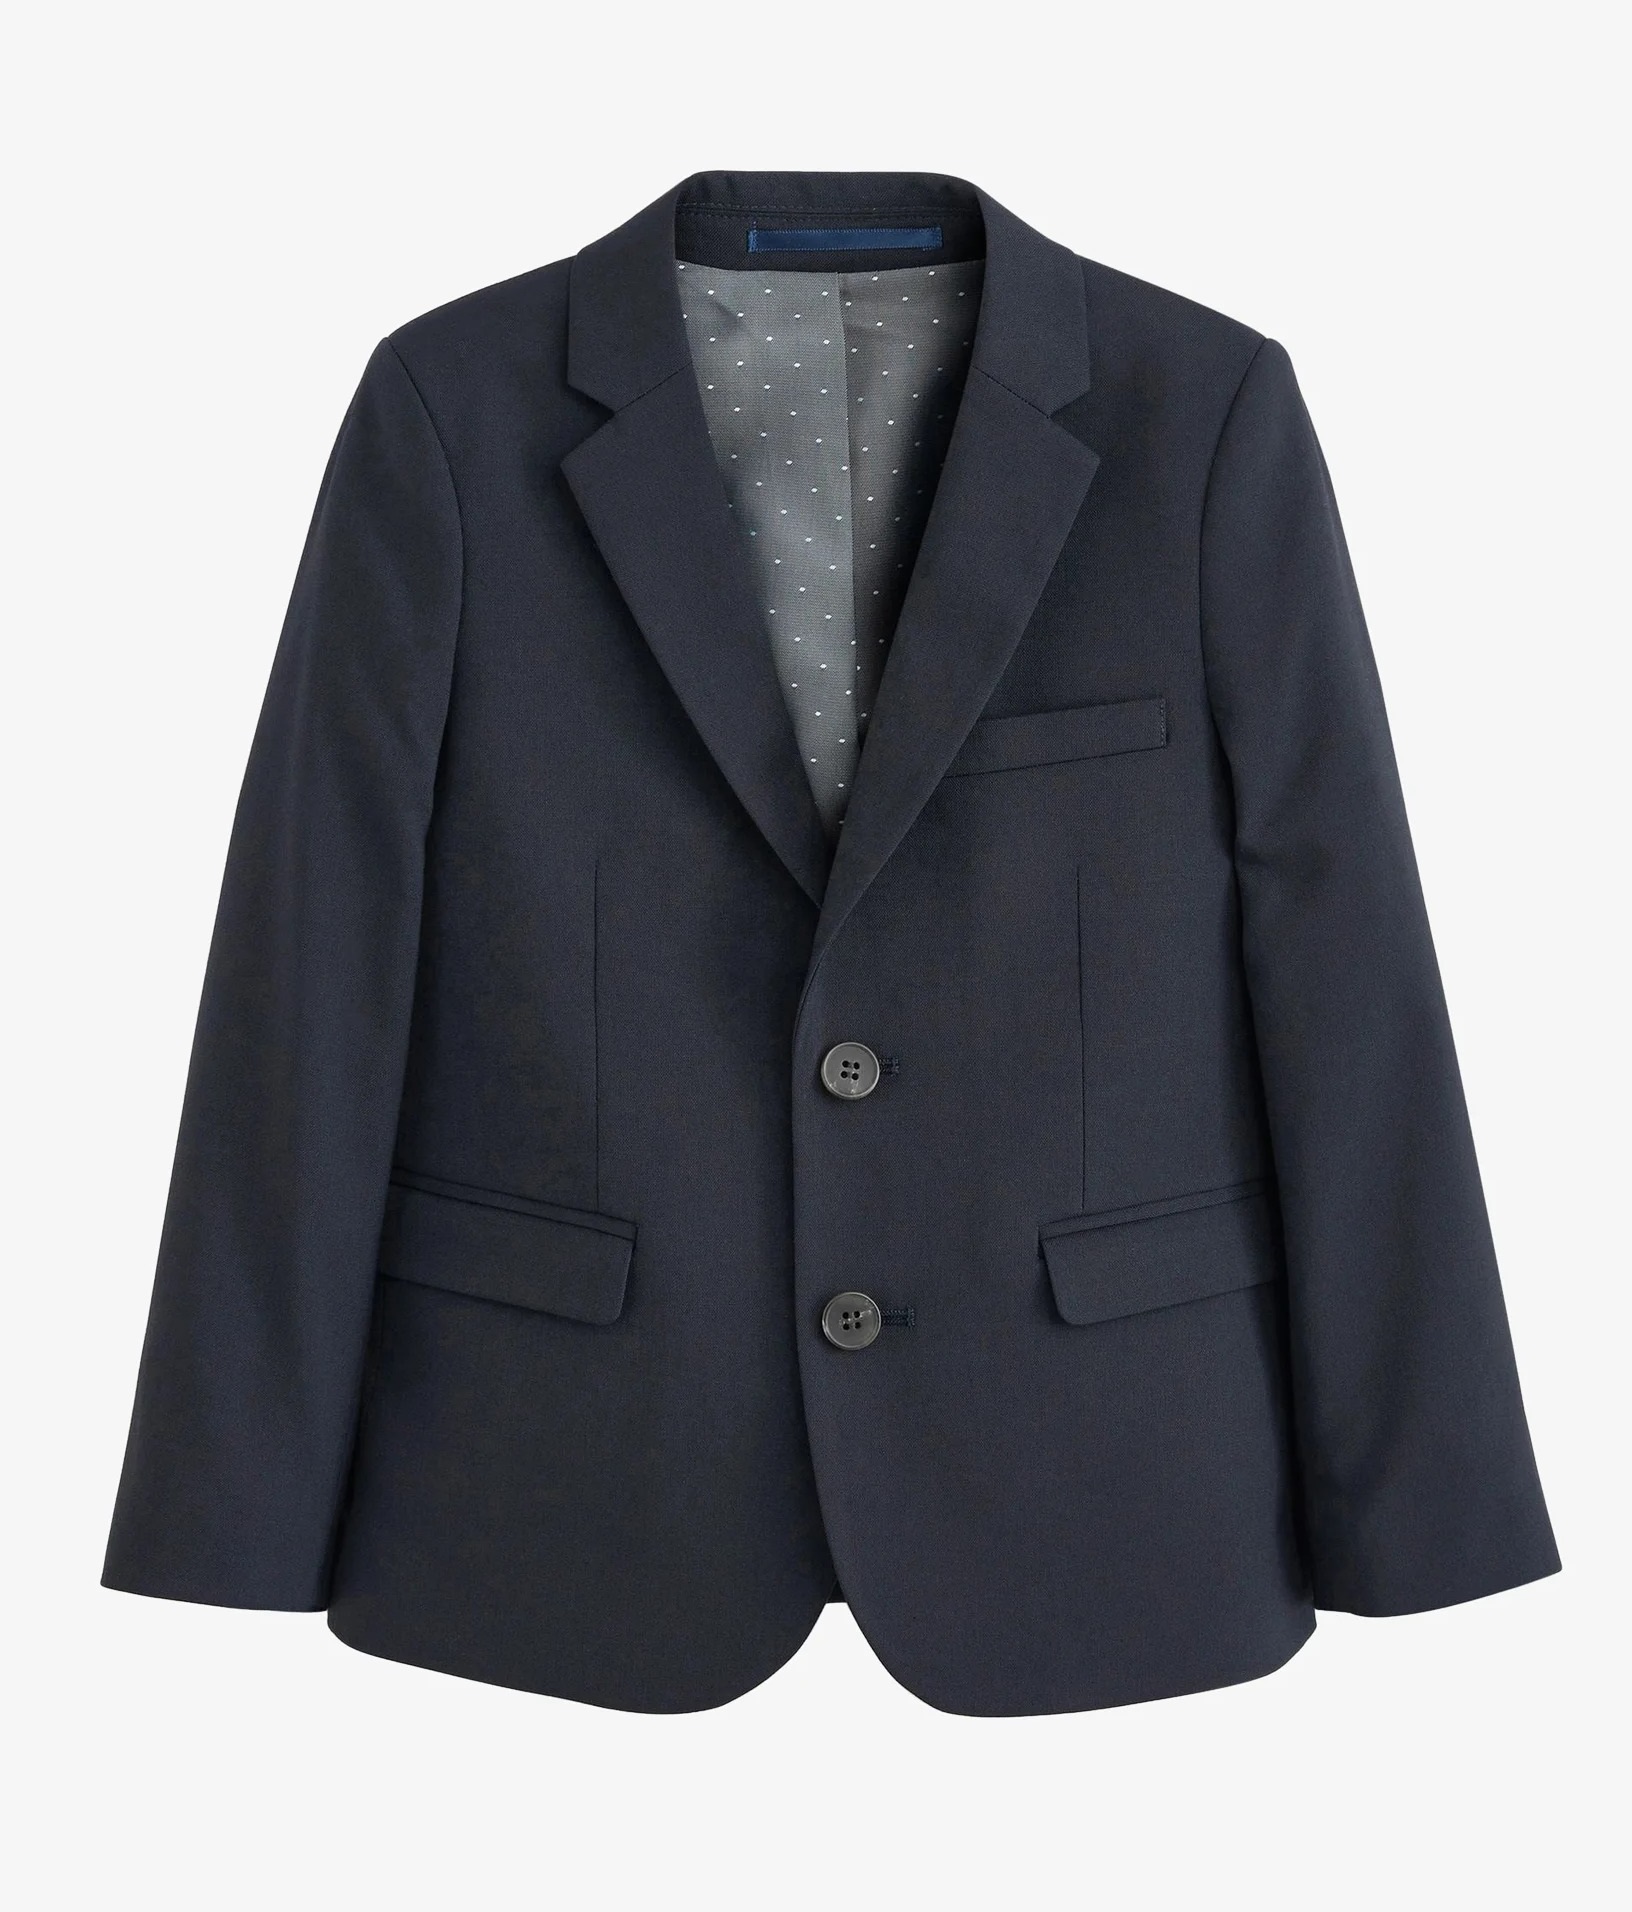 Пиджак Next Tailored Fit Suit, темно-синий пиджак uniqlo relaxed fit tailored коричневый